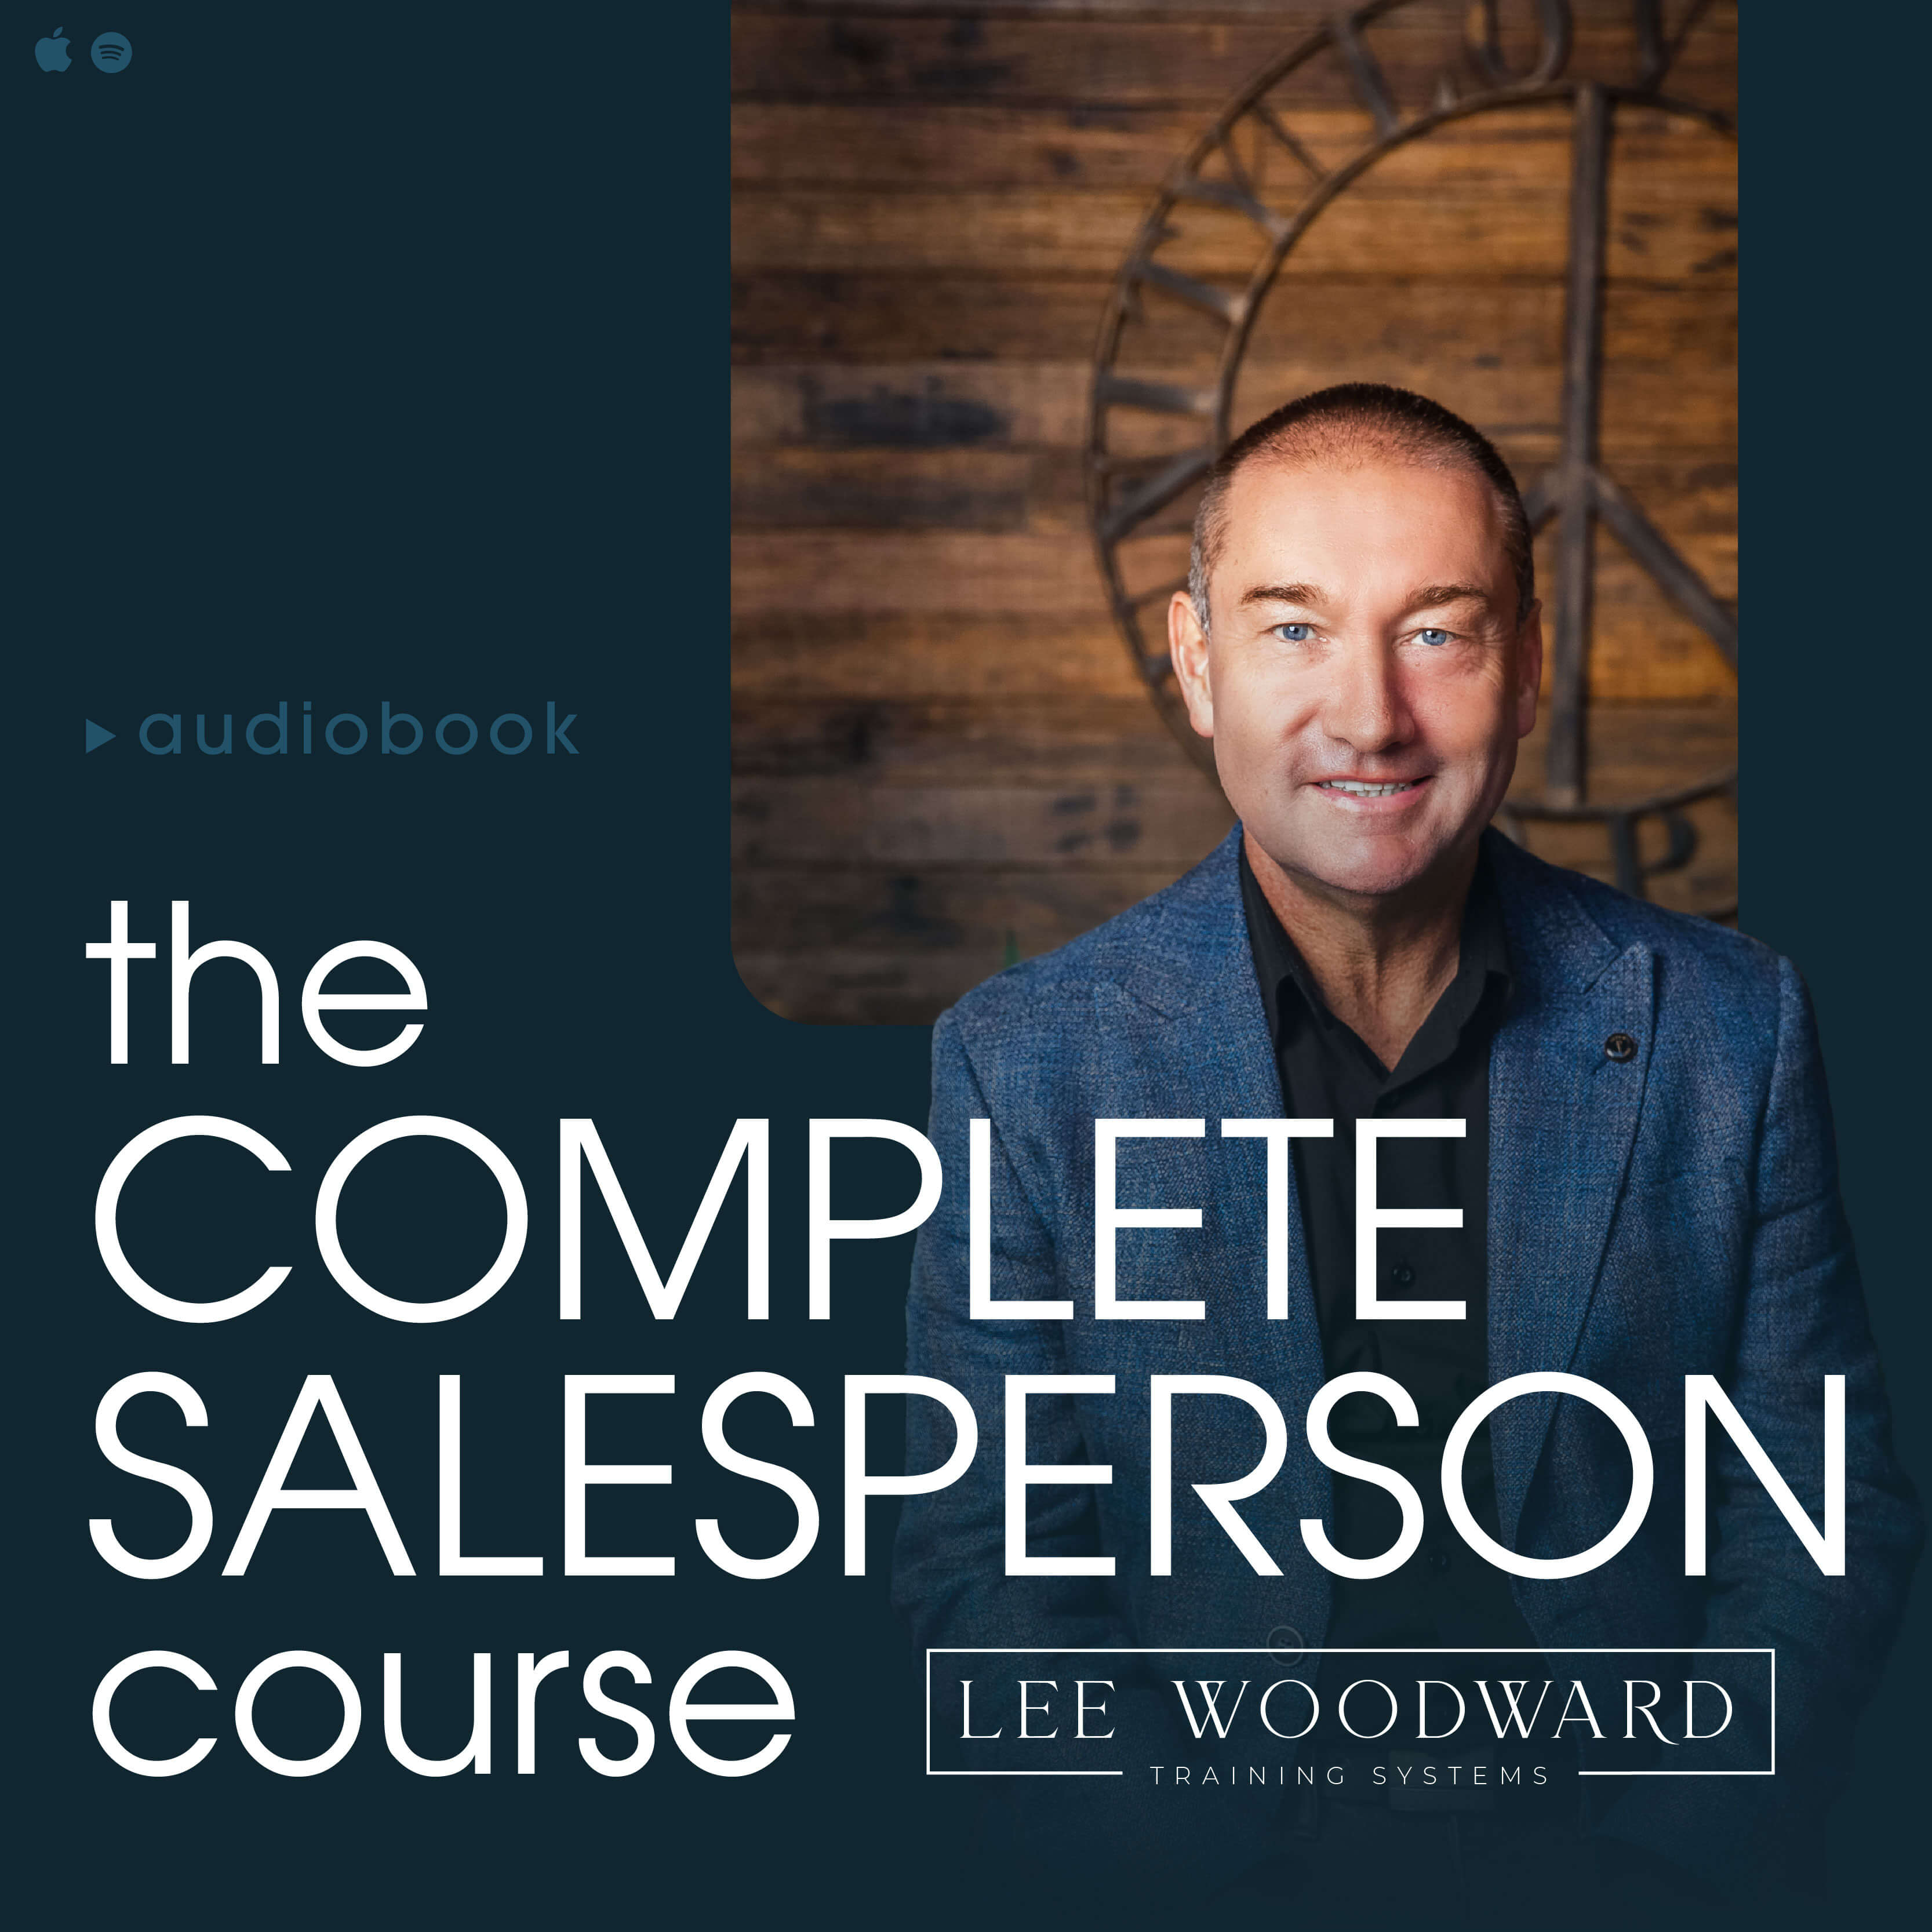 The Complete Salesperson Course Audio Book